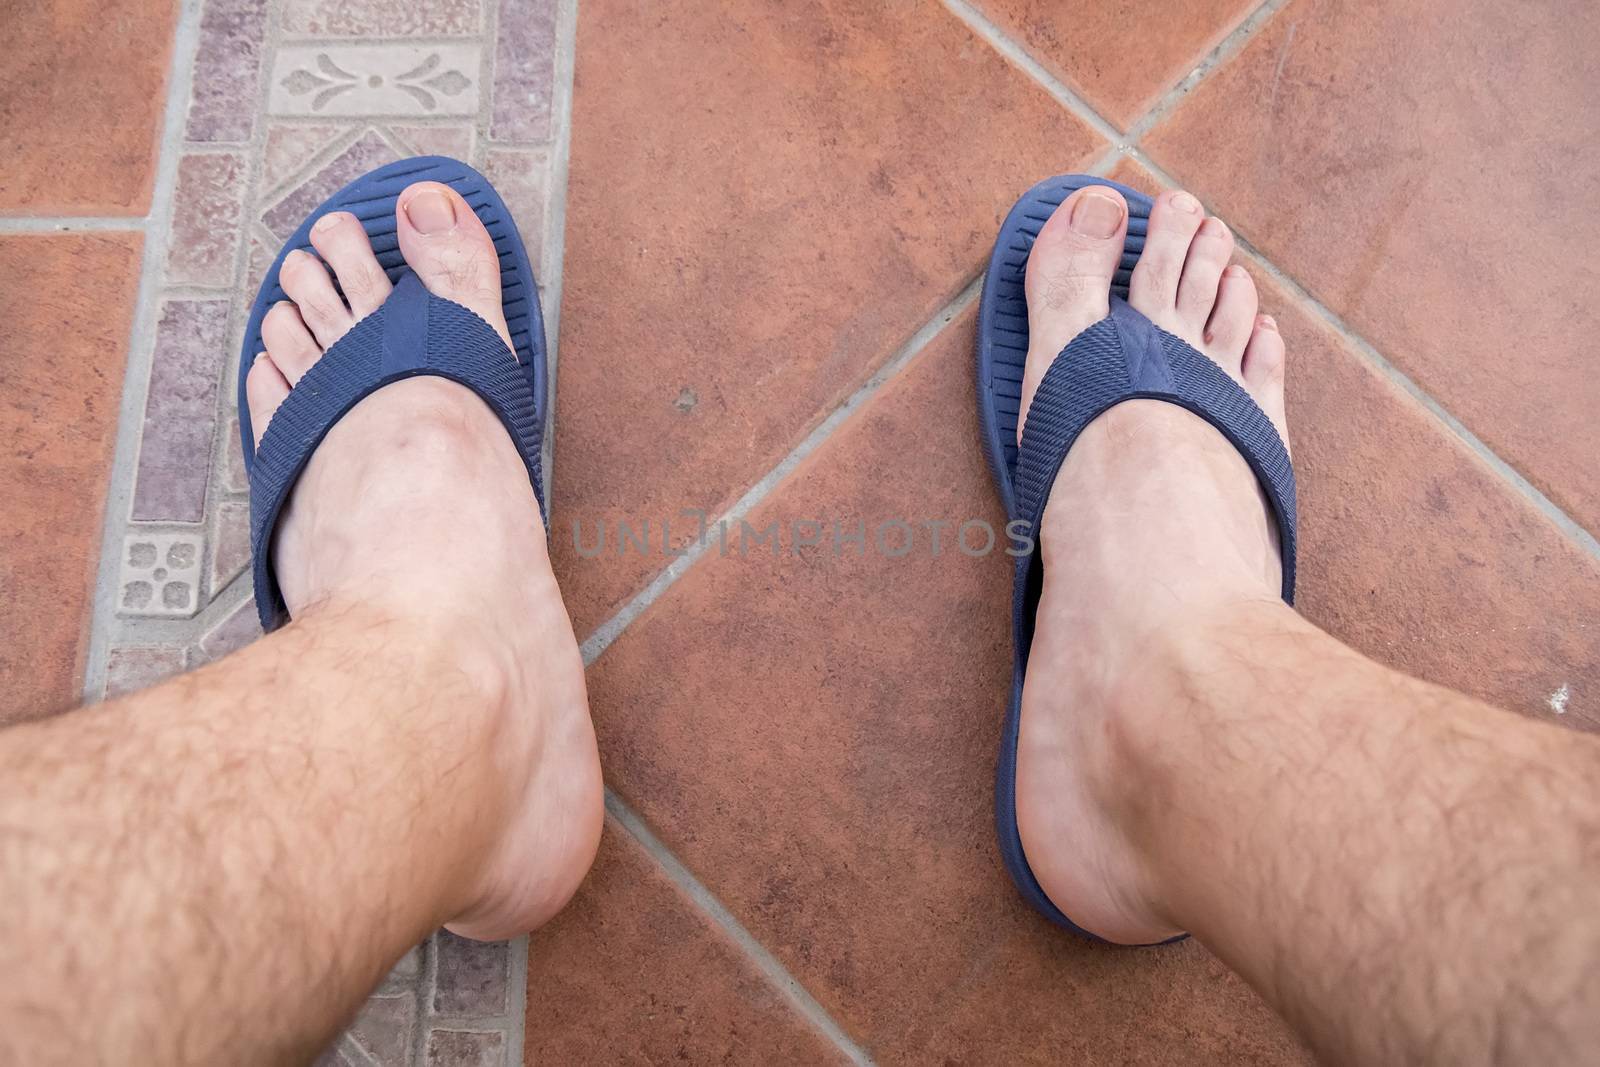  Feet in blue flip flops at summer